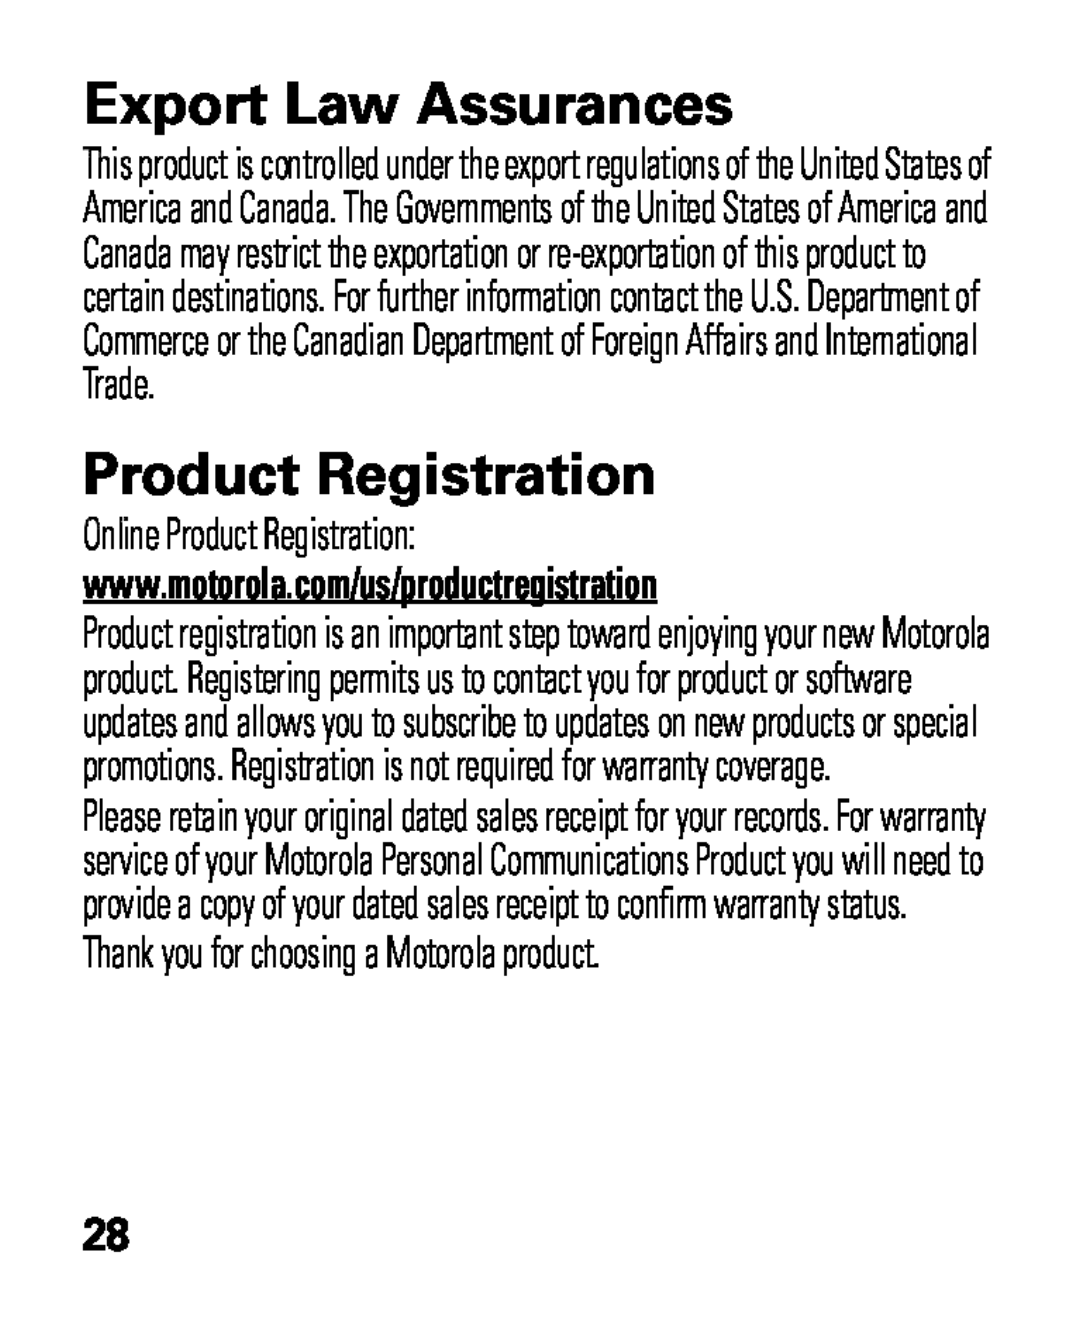 Motorola HK100 Export Law Assurances, Online Product Registration, Thank you for choosing a Motorola product 